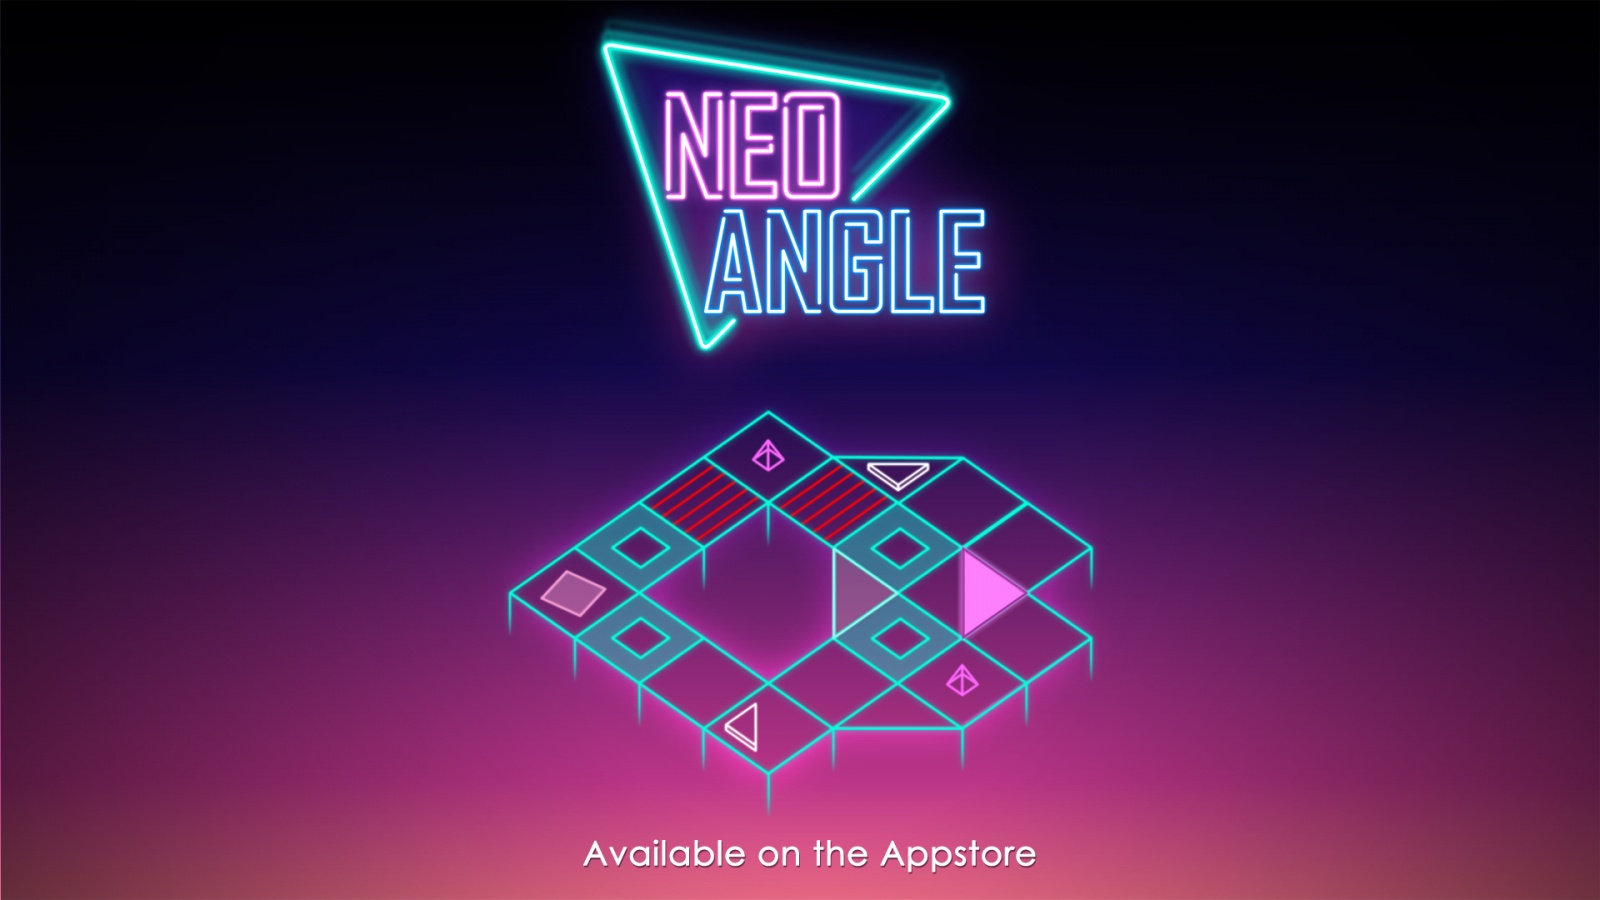 Игра-головоломка Neo Angle. Продолжение истории разработки и релиз в Appstore - 8